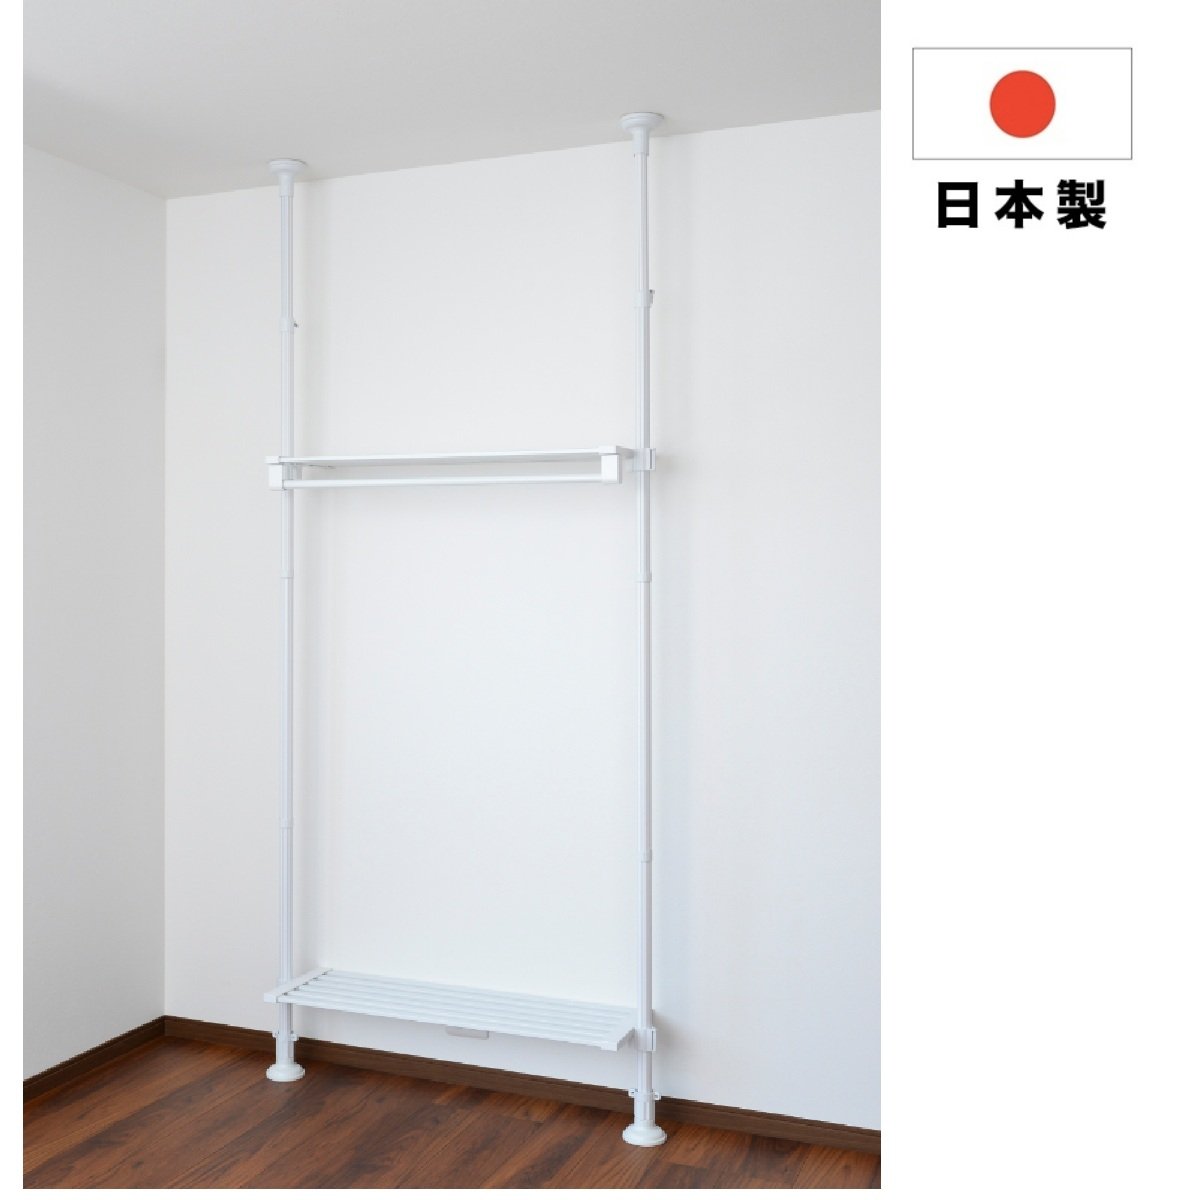 Daim Floor To Ceiling Dual Pole Metal Extendable Hanger Grey